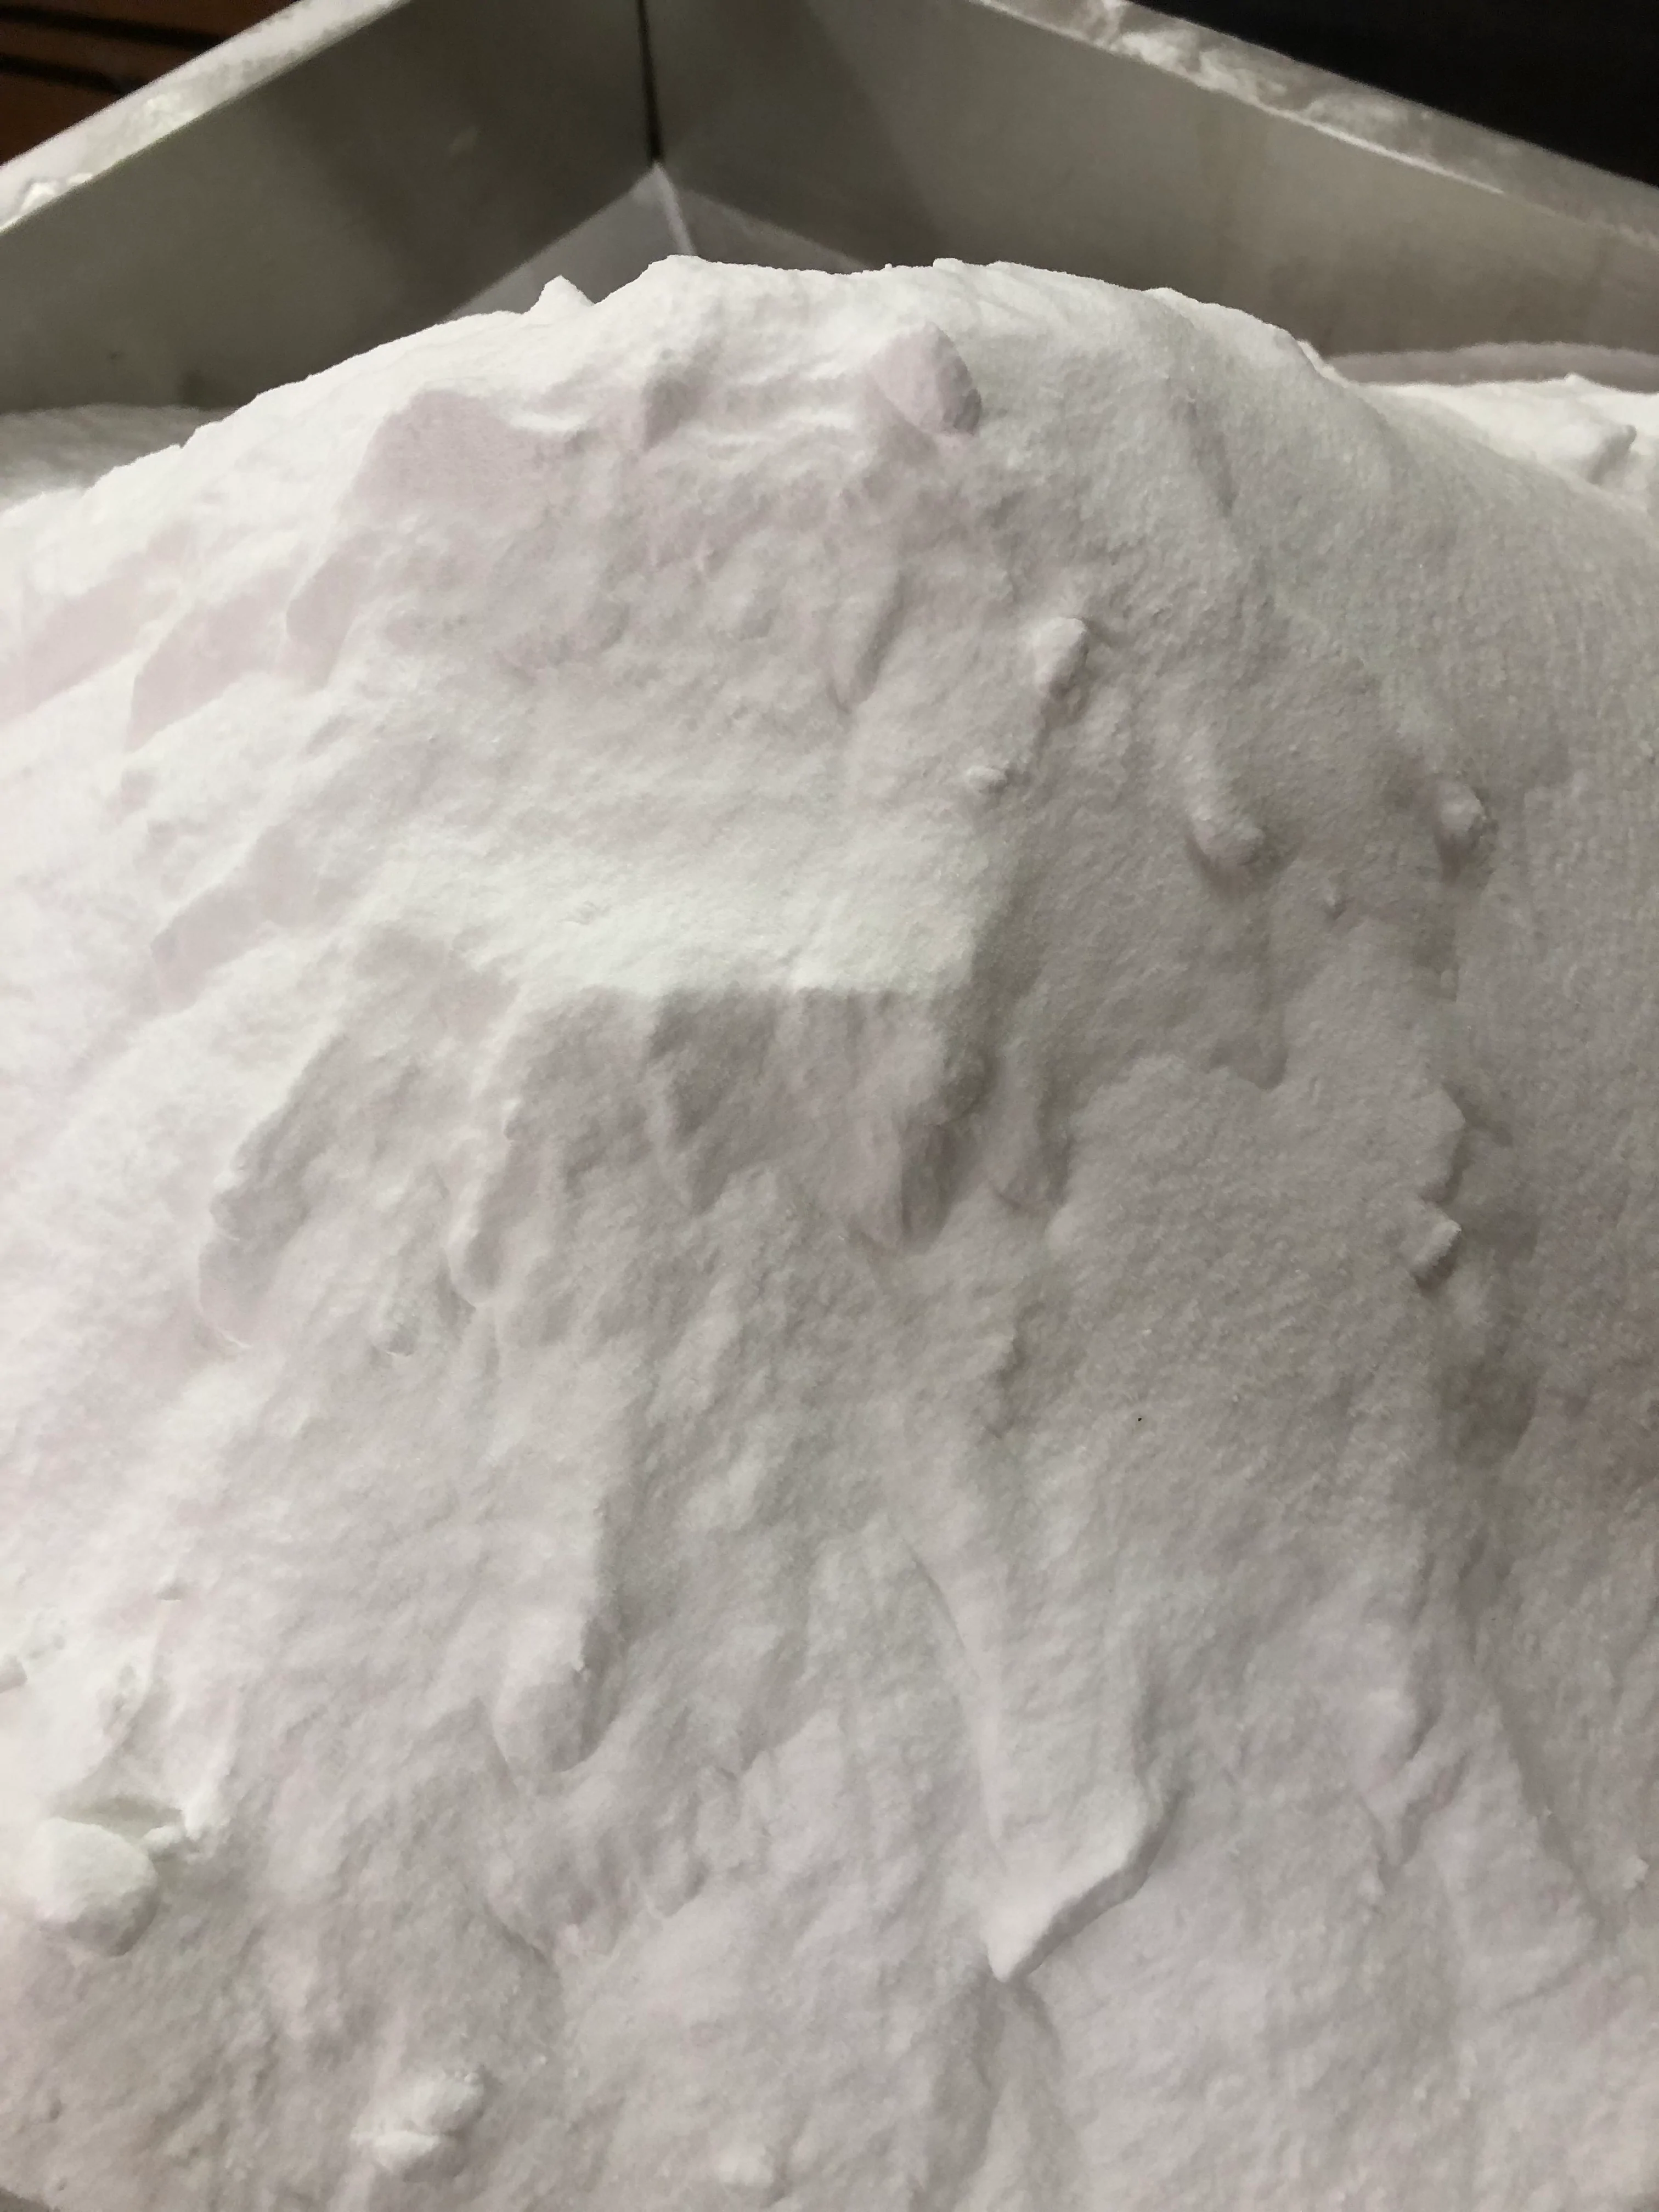 Keystone Pantry Allulose Powder Rare Sugar Sweetener  Keto, Vegan and Diabetic Friendly